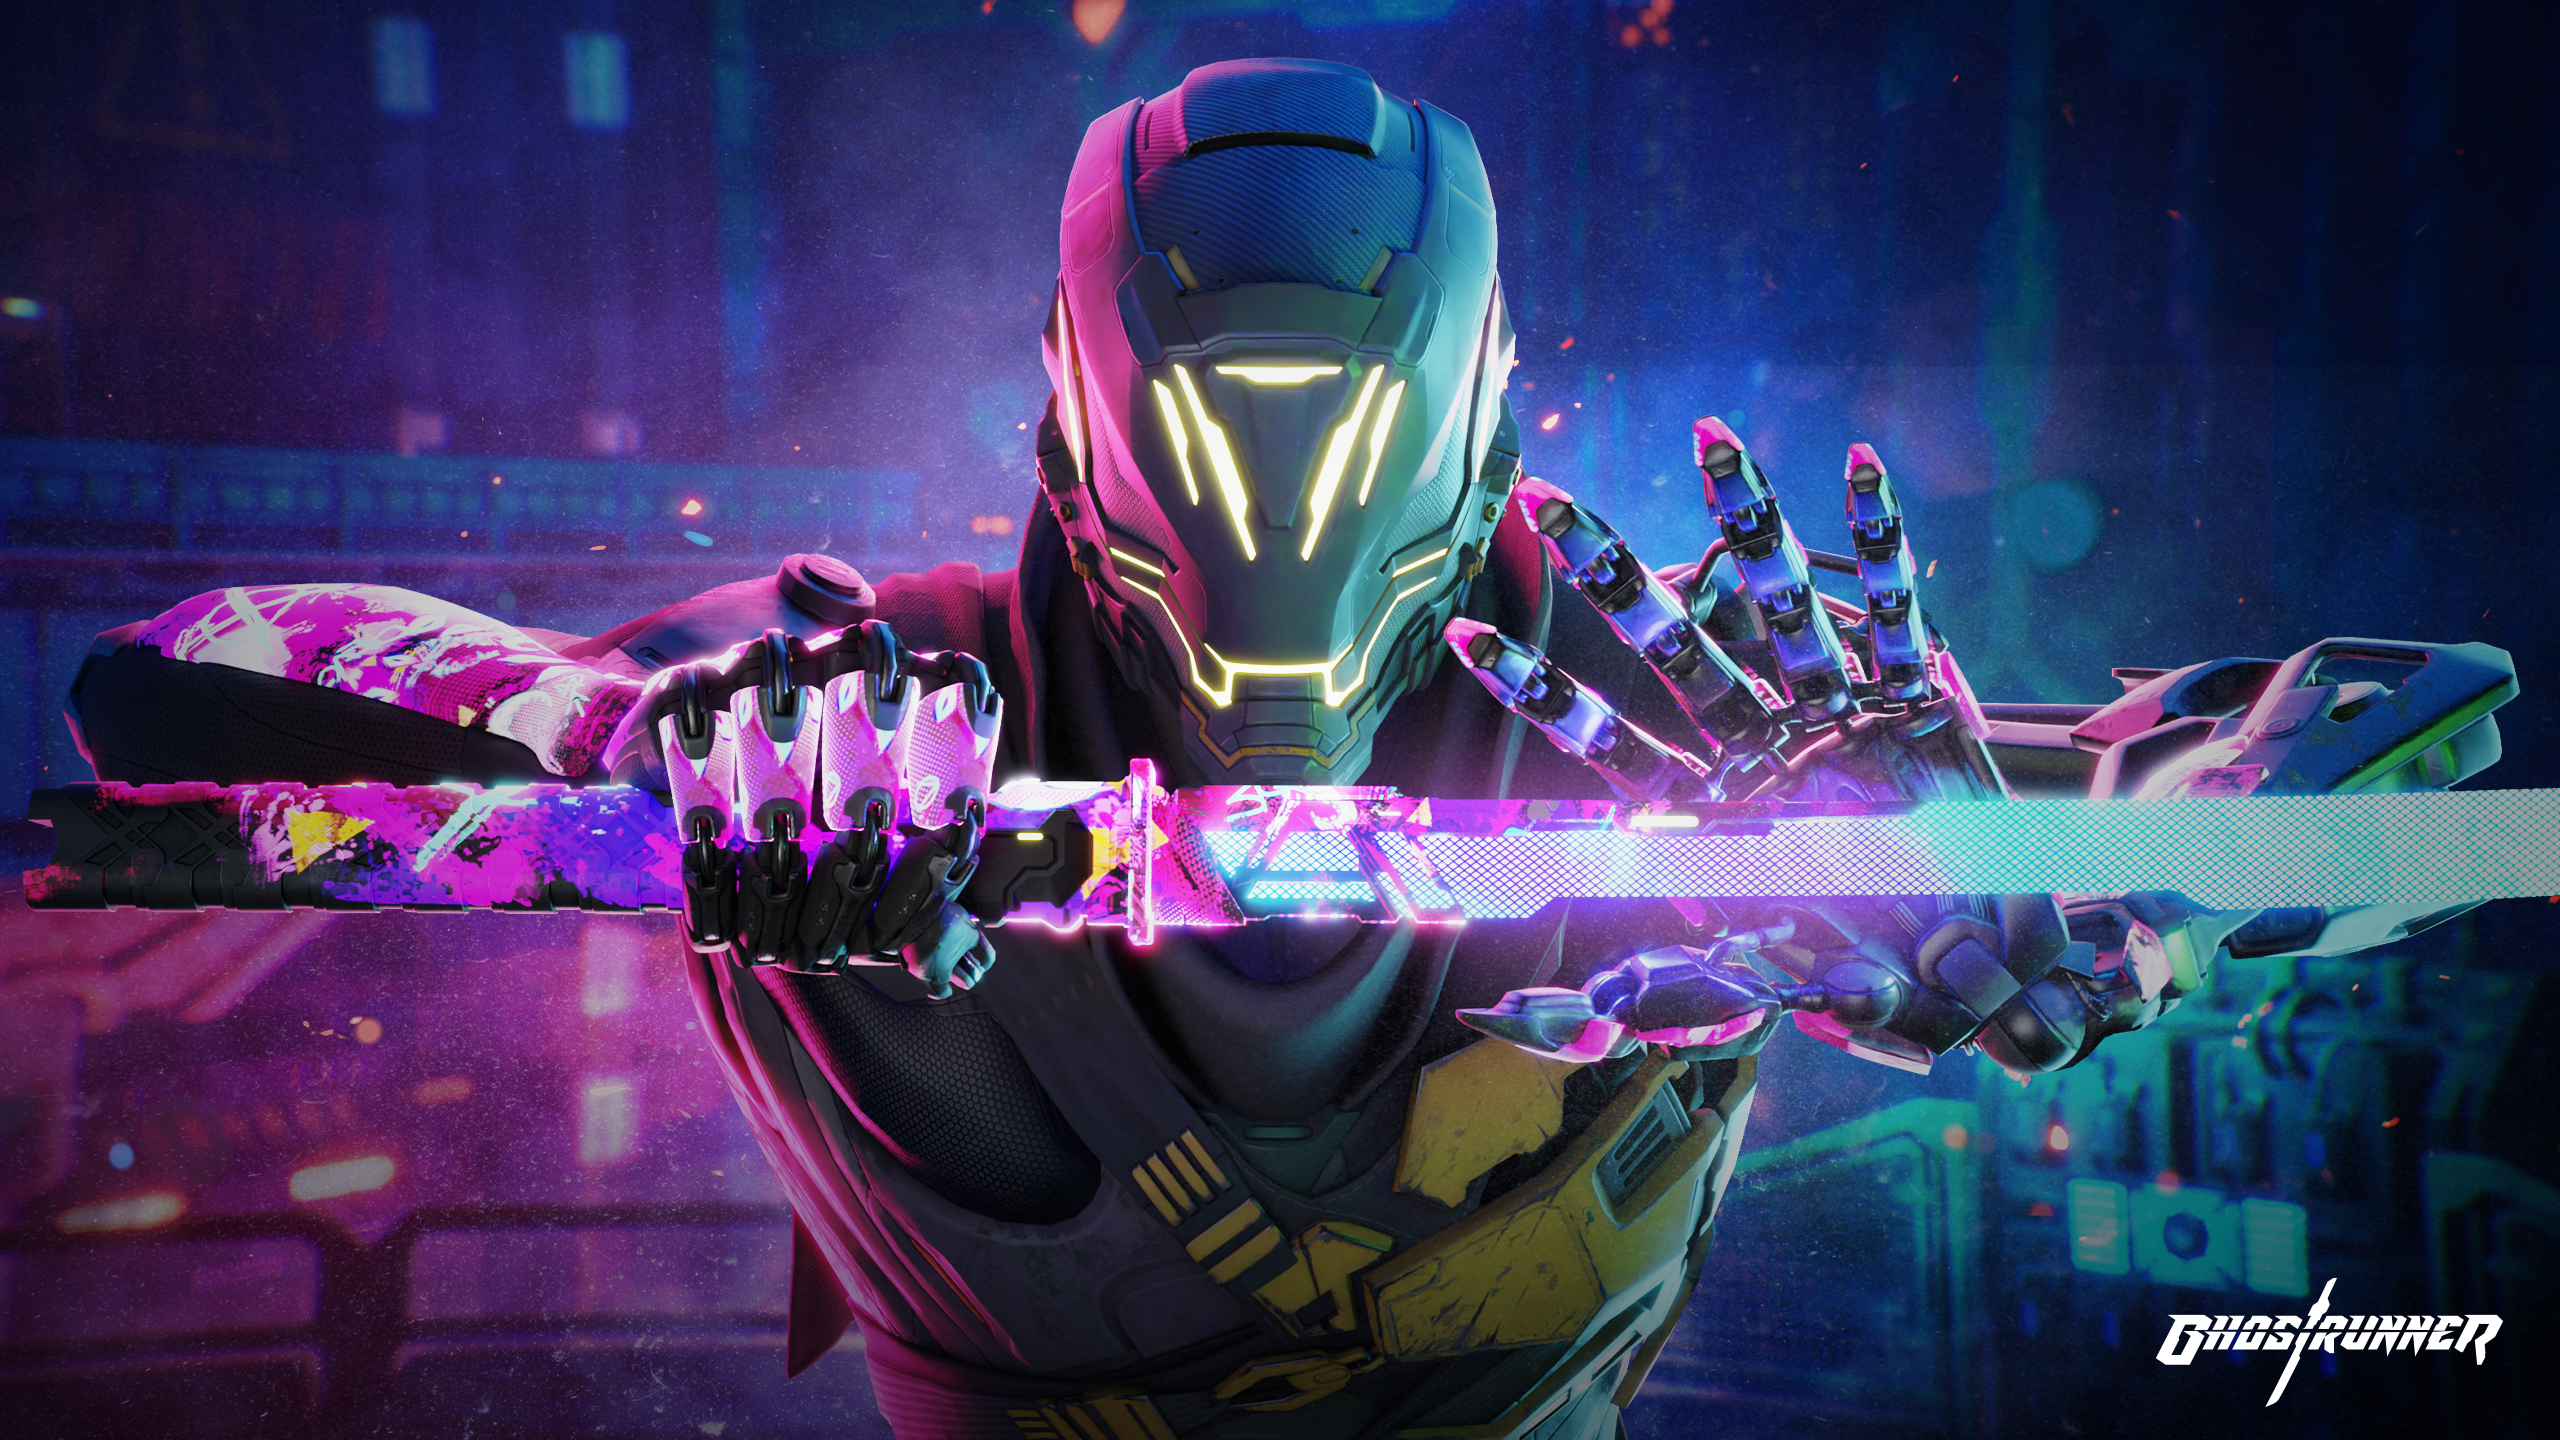 General 2560x1440 Ghostrunner cyberpunk digital art video games video game art katana frontal view weapon video game characters cyborg